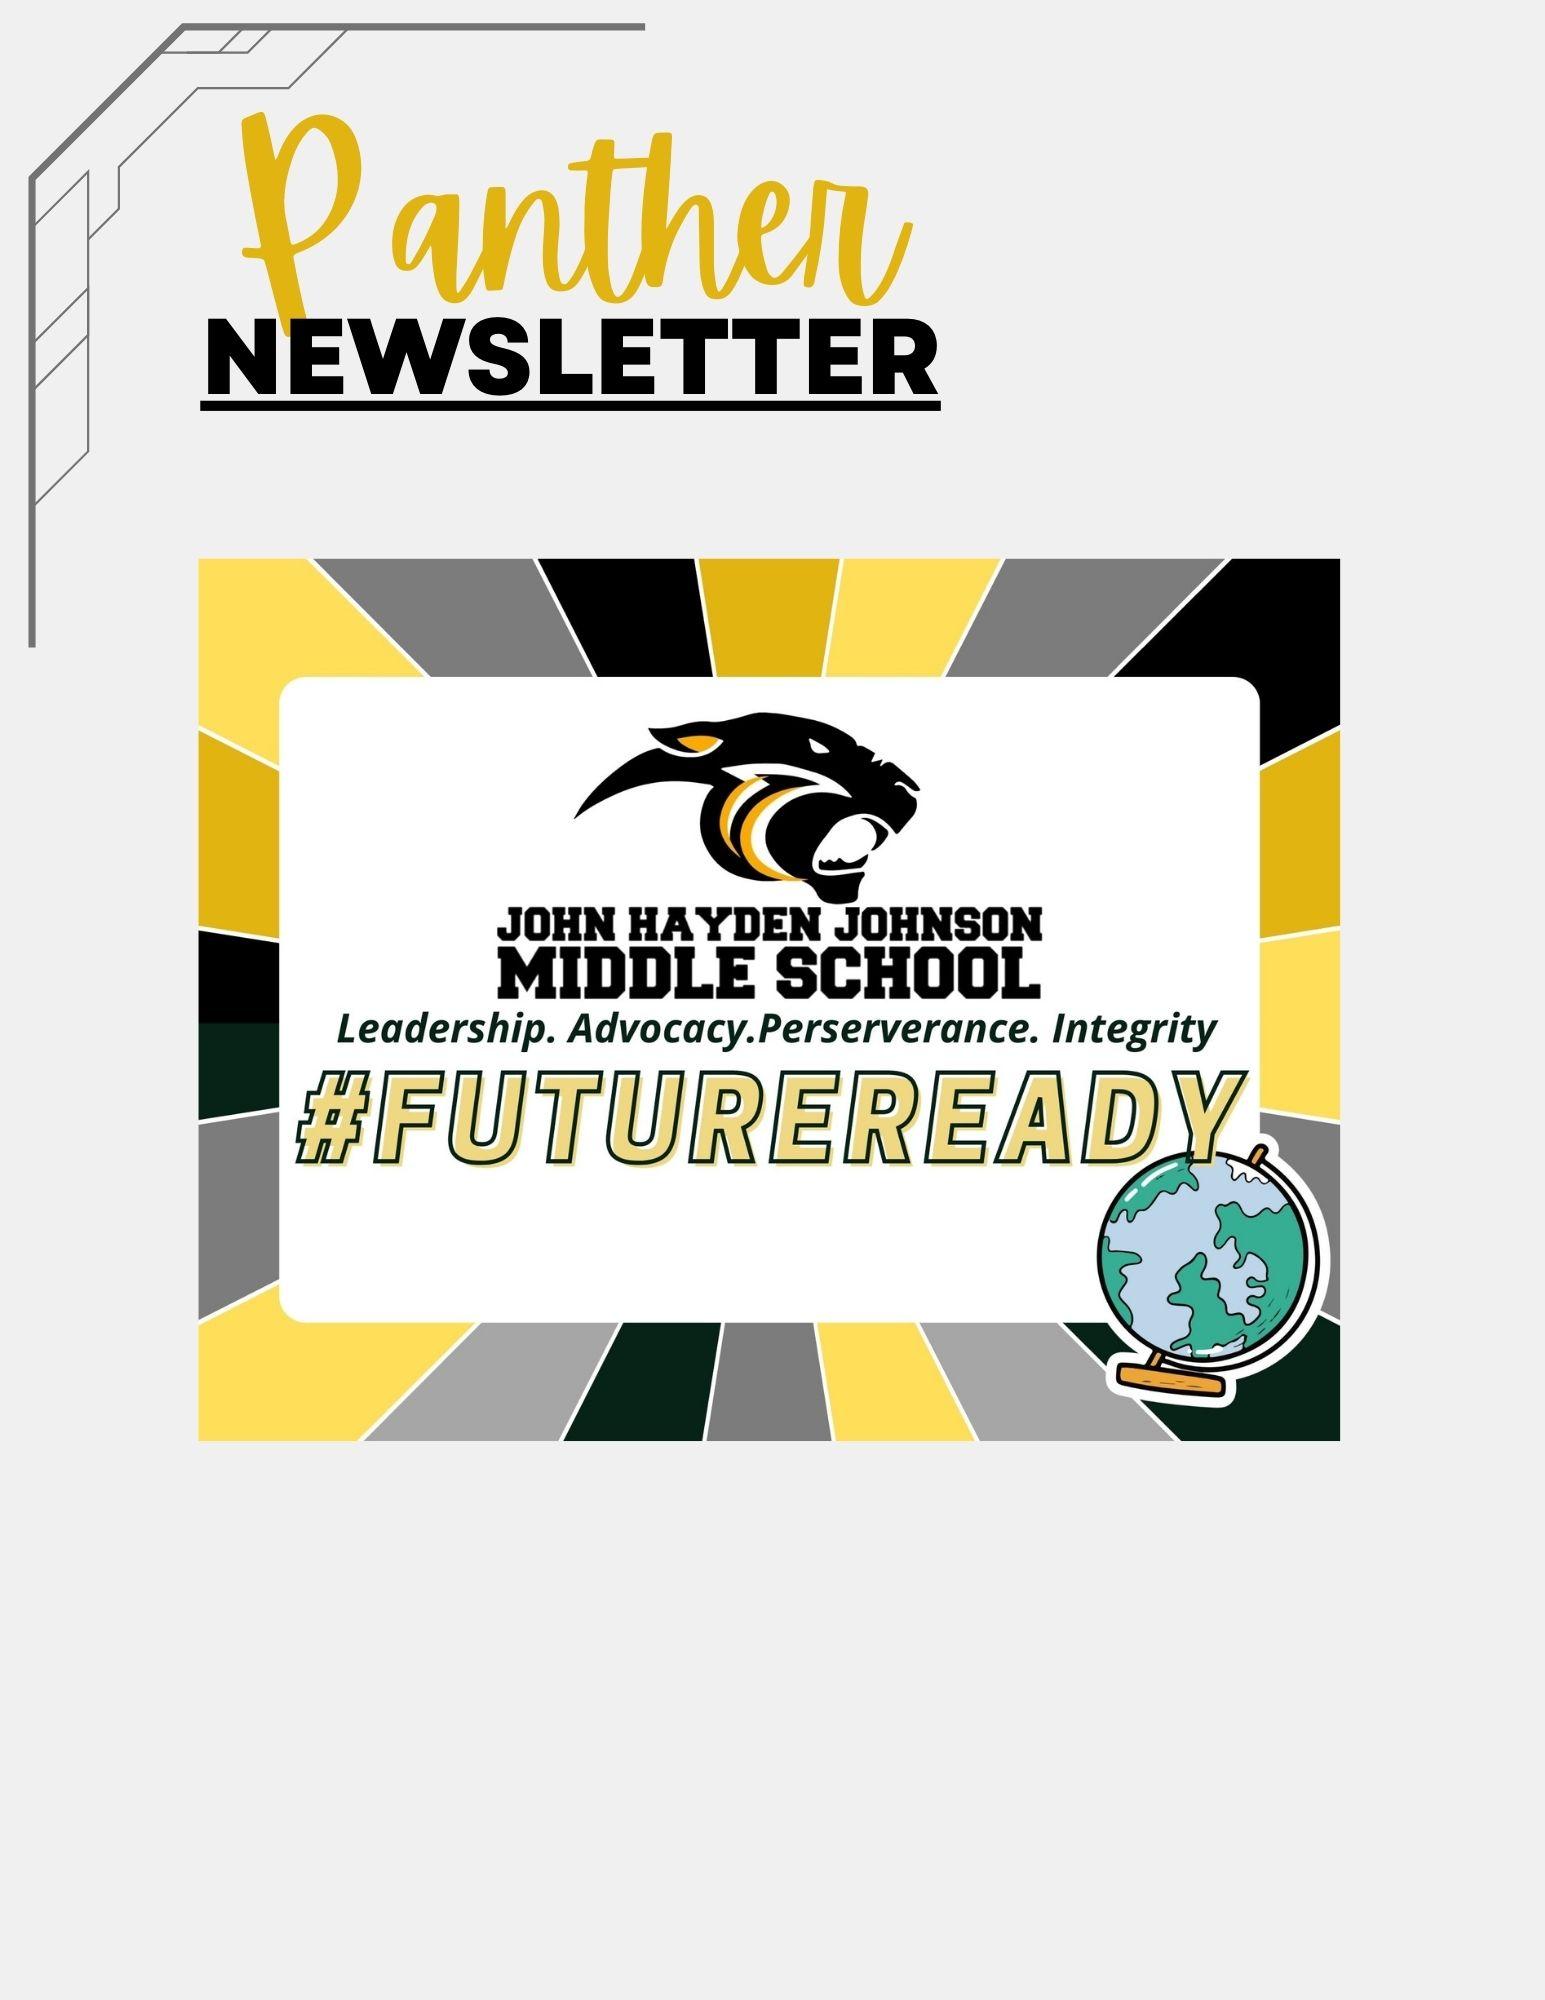 Panther Newsletter Header